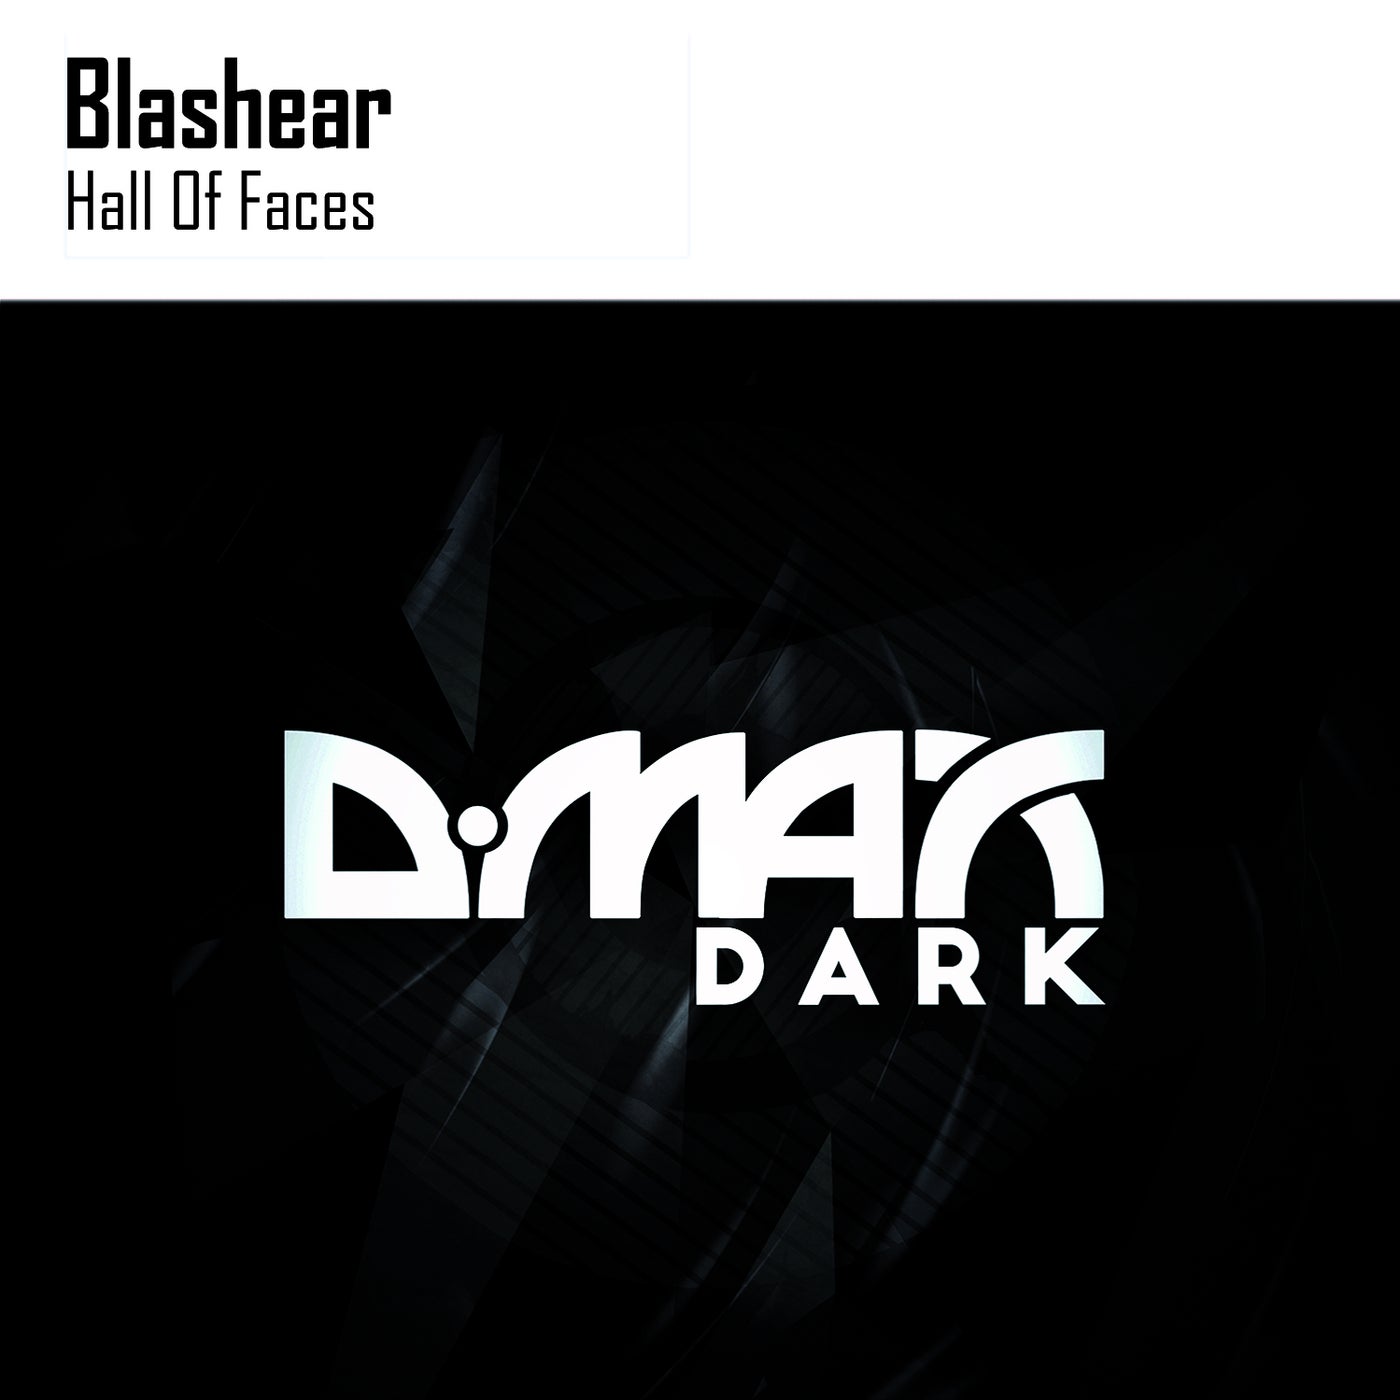 Hall Of Faces (Original Mix)